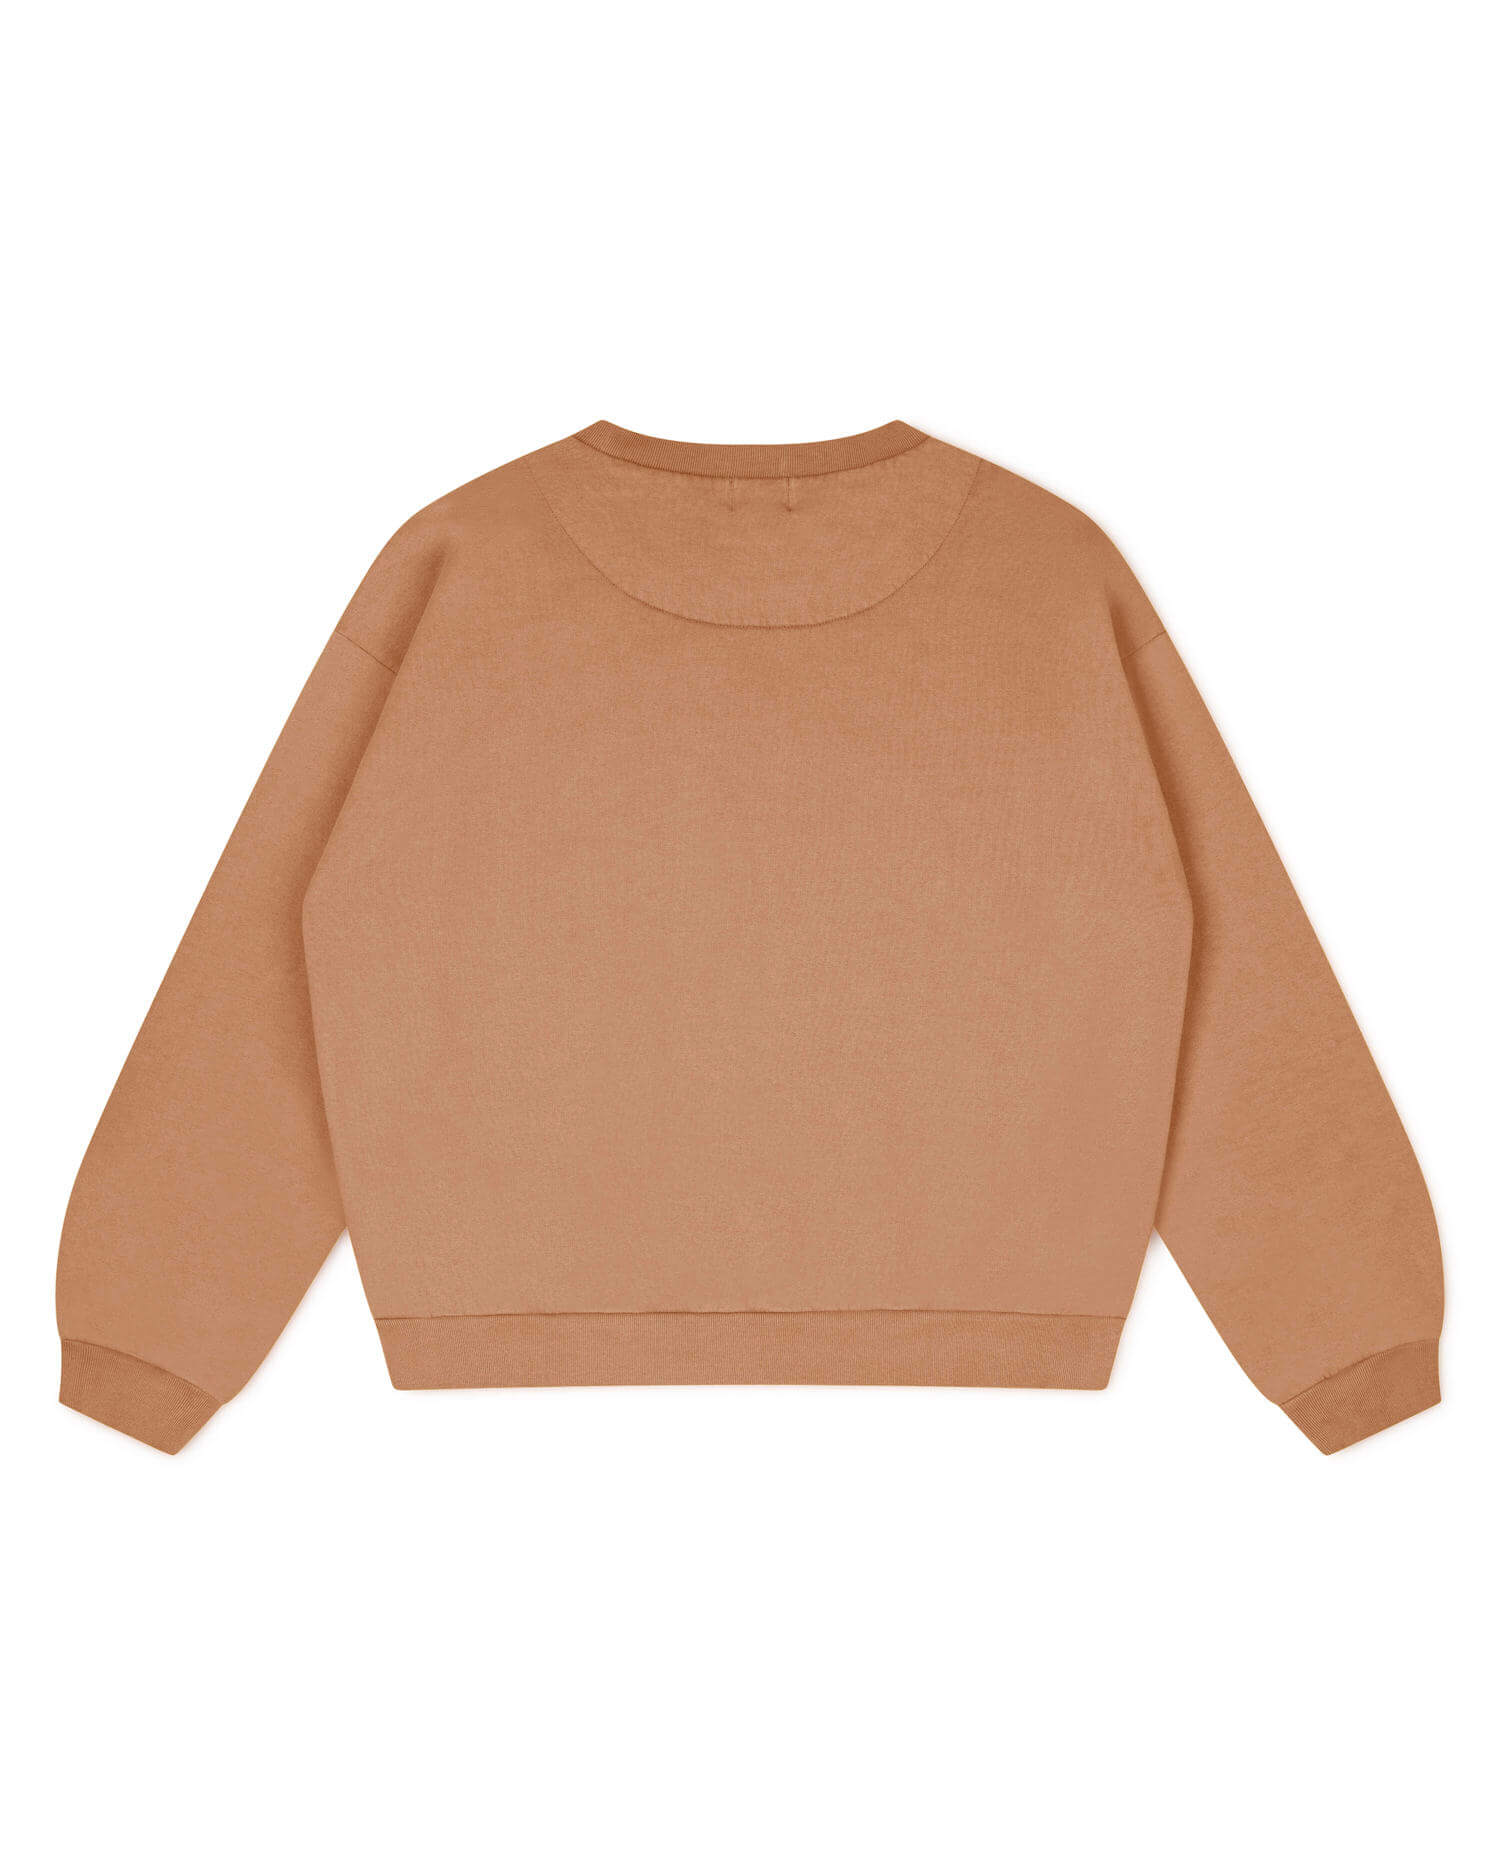 Light brown sweater made from 100% organic cotton from Matona